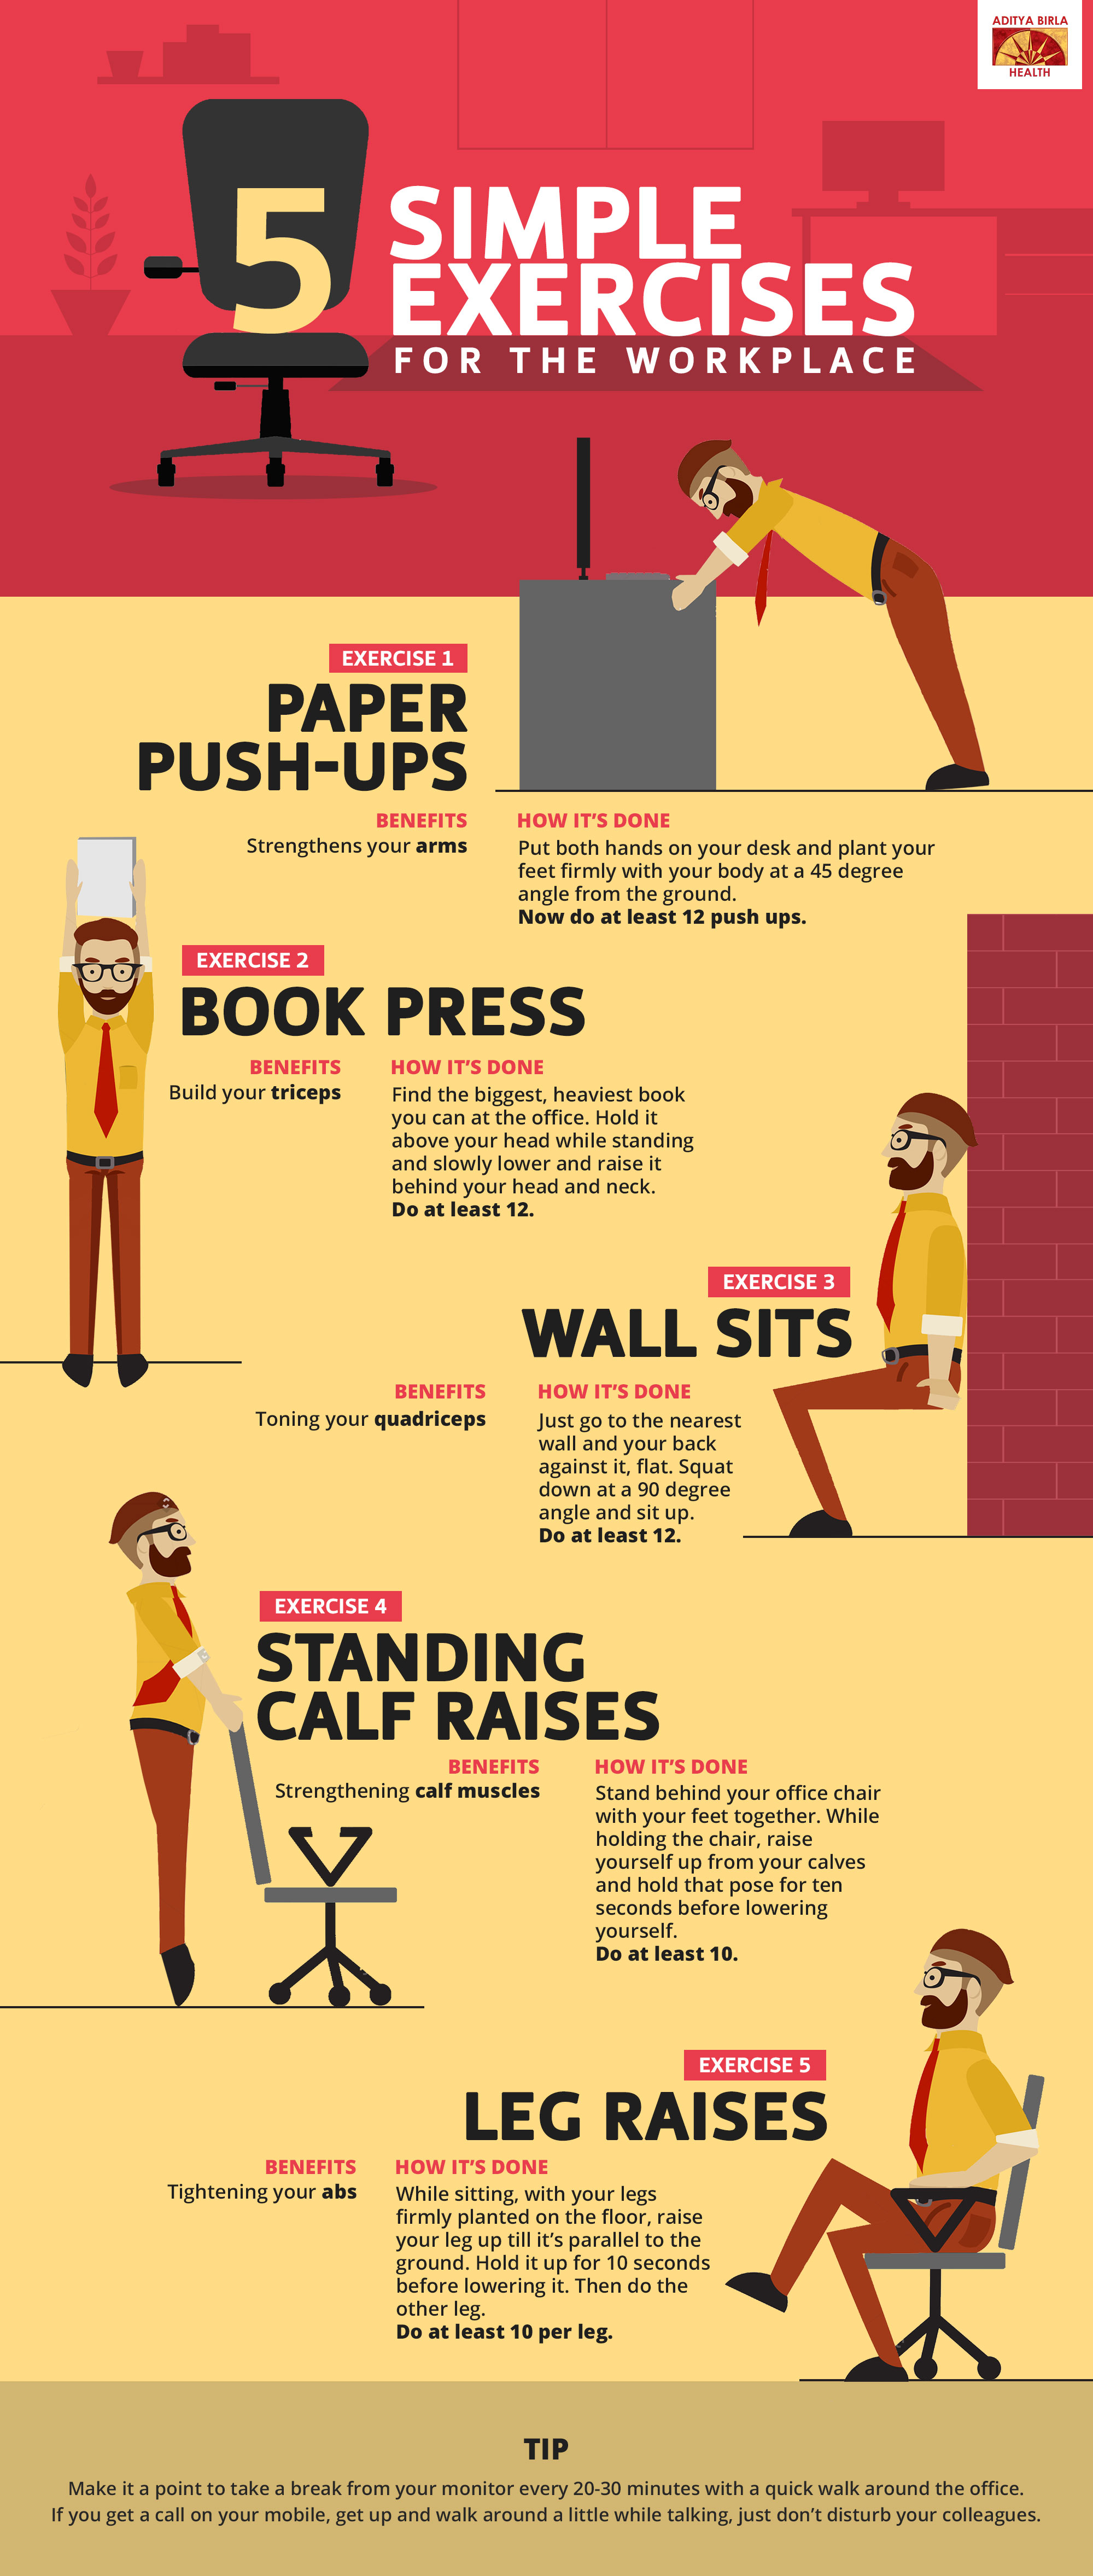 Simple exercises at work like paper push ups, Book press and leg raises